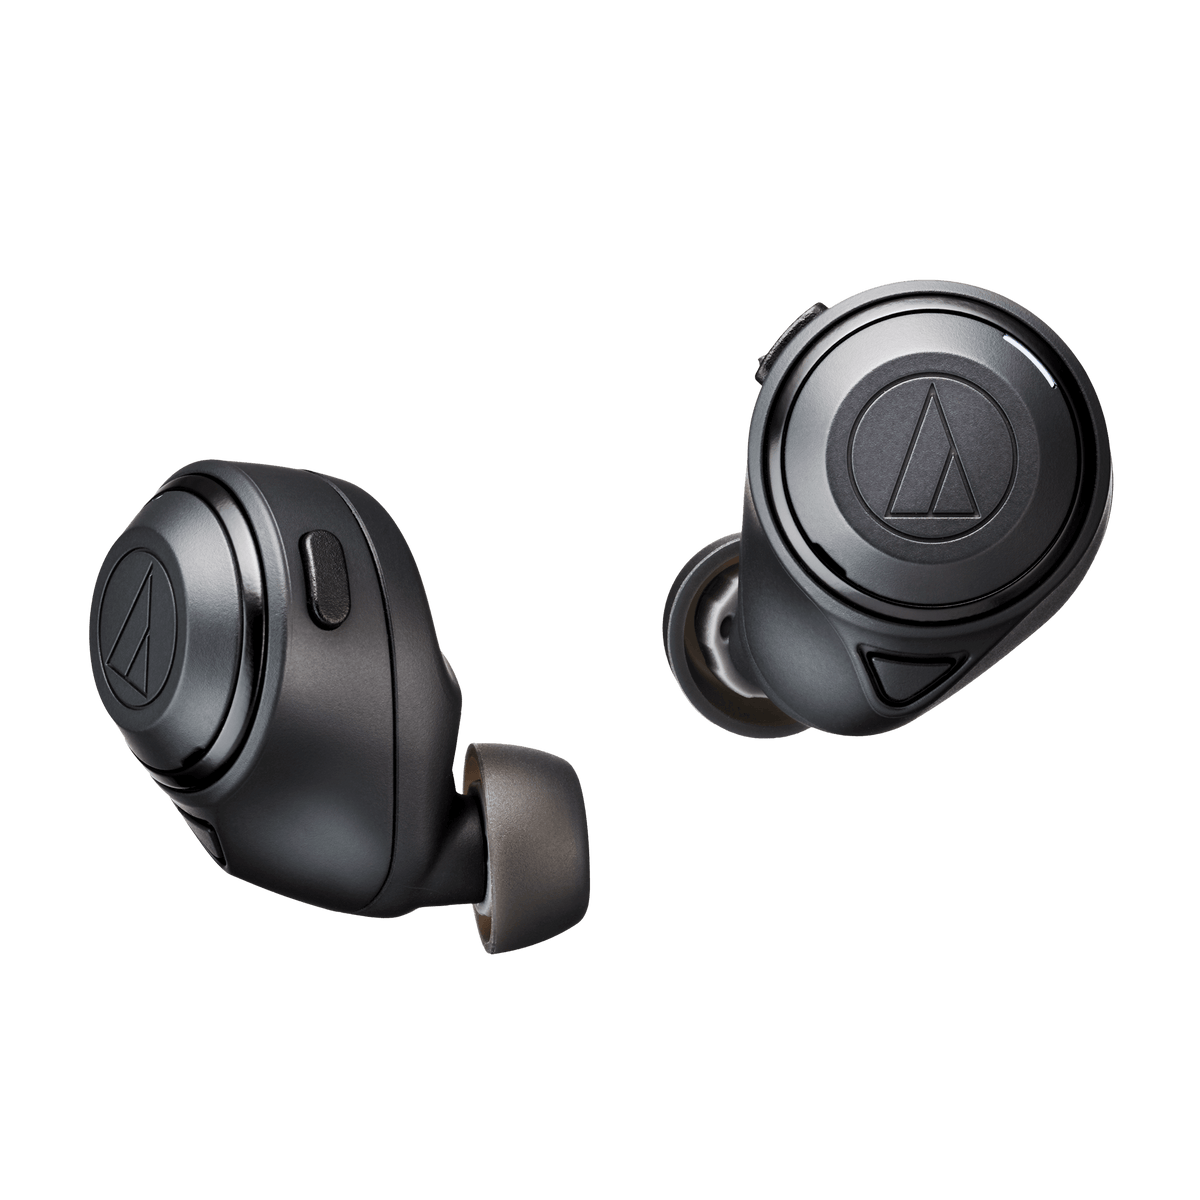 Audio Technica wireless Ear Buds, CKS50TWBK, pair